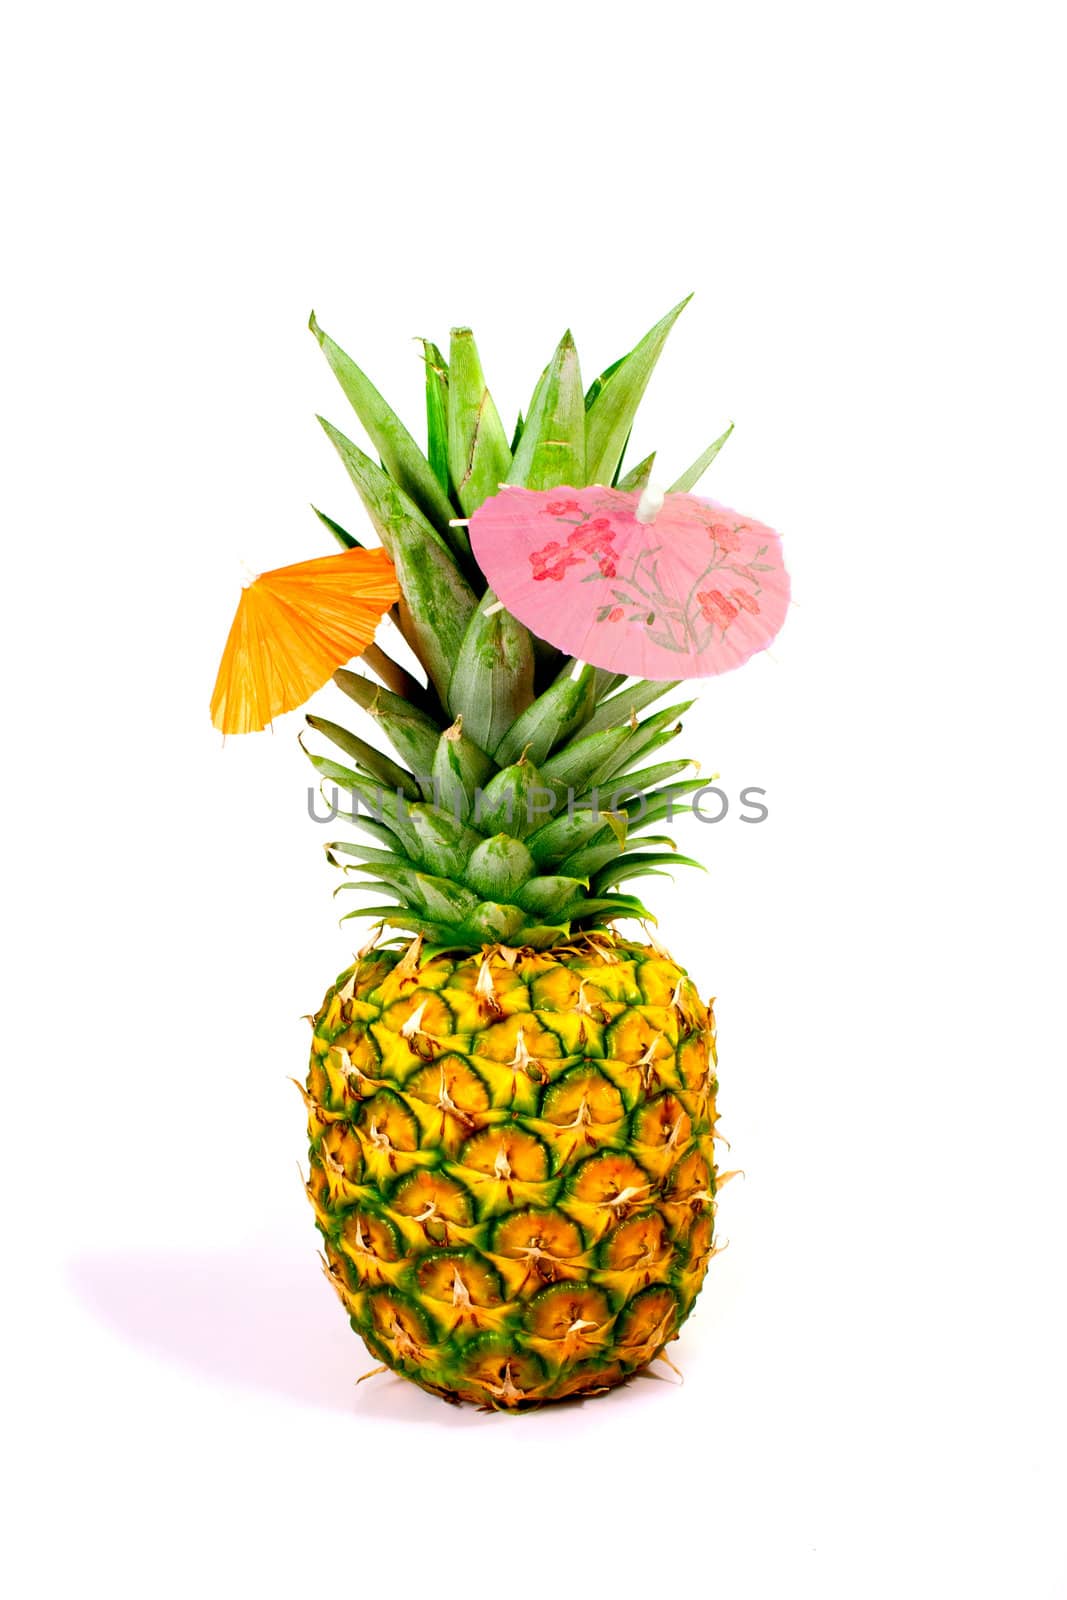 Pineapple with orange and pink umbrella